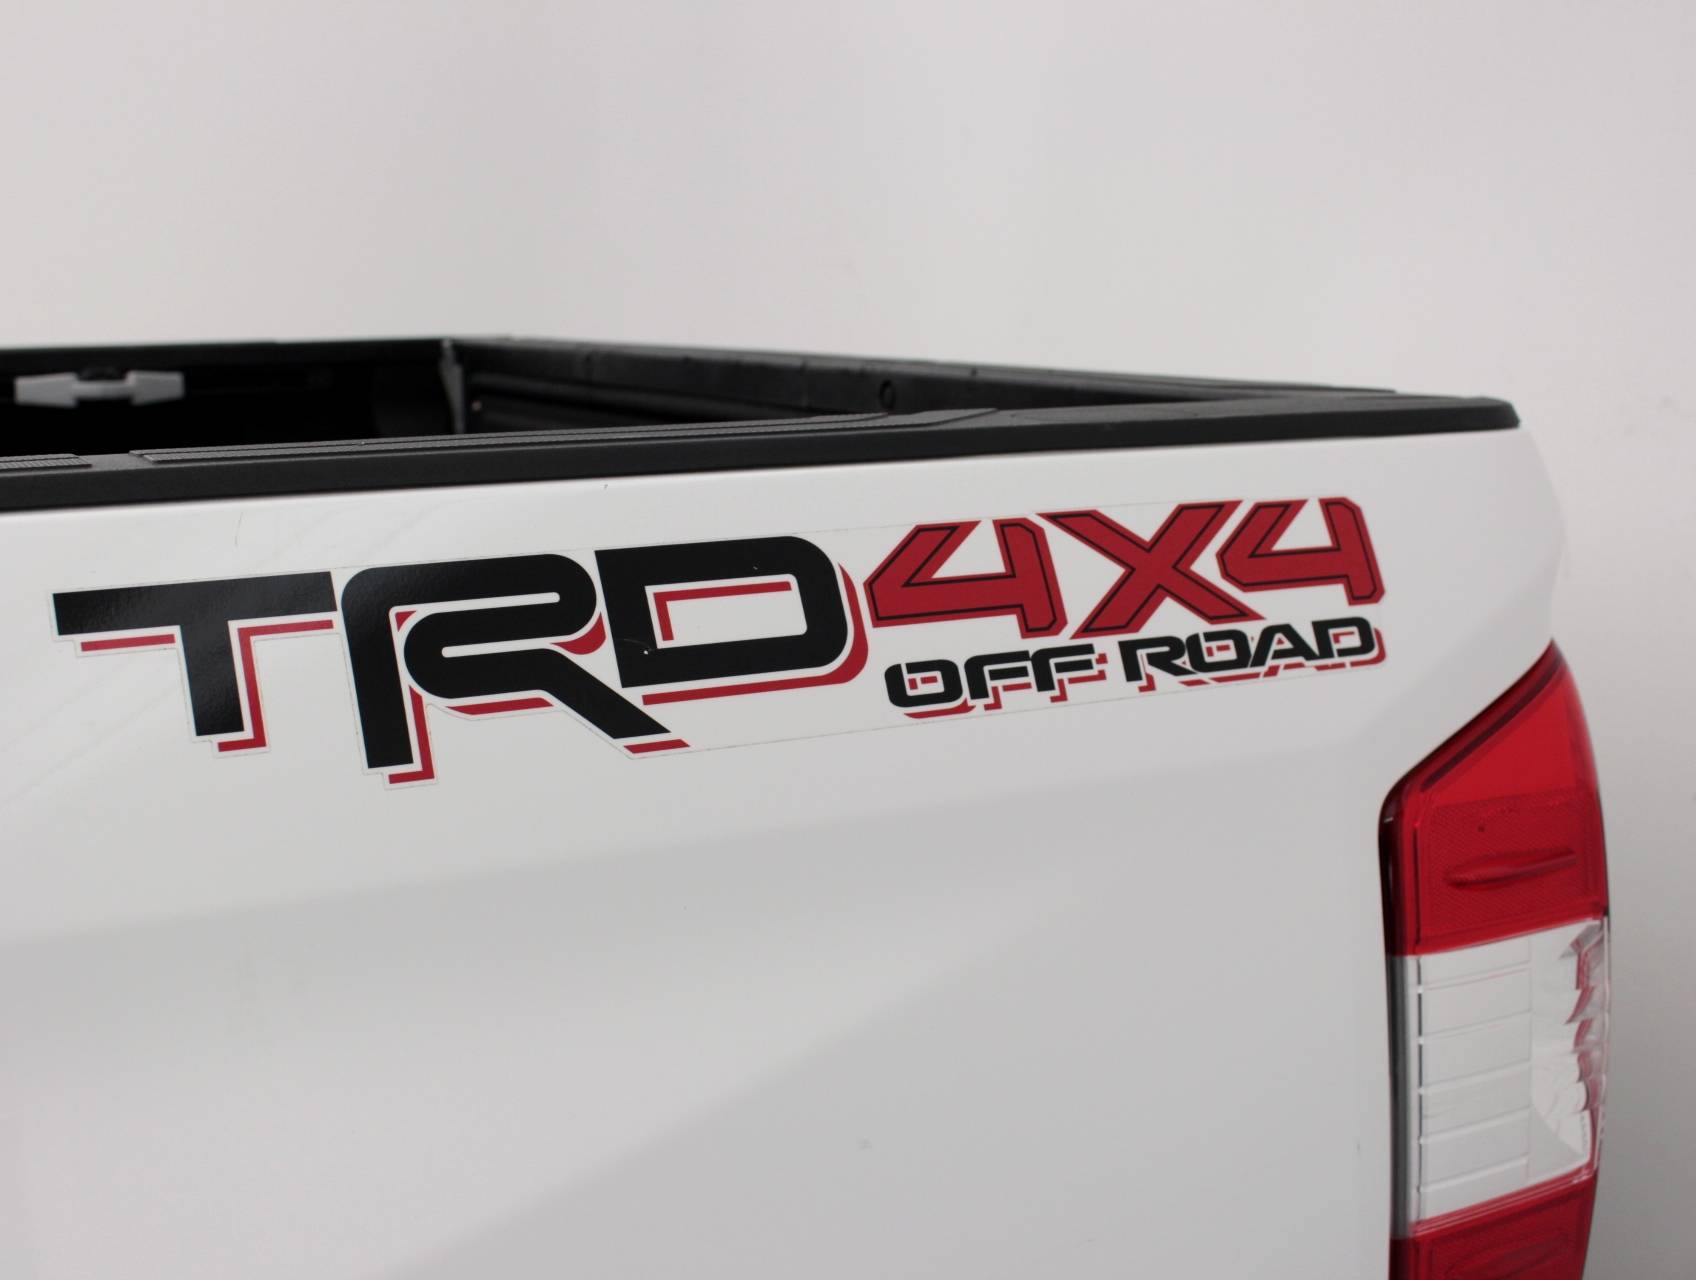 Florida Fine Cars - Used TOYOTA TUNDRA 2016 MARGATE Limited Crewmax 4x4